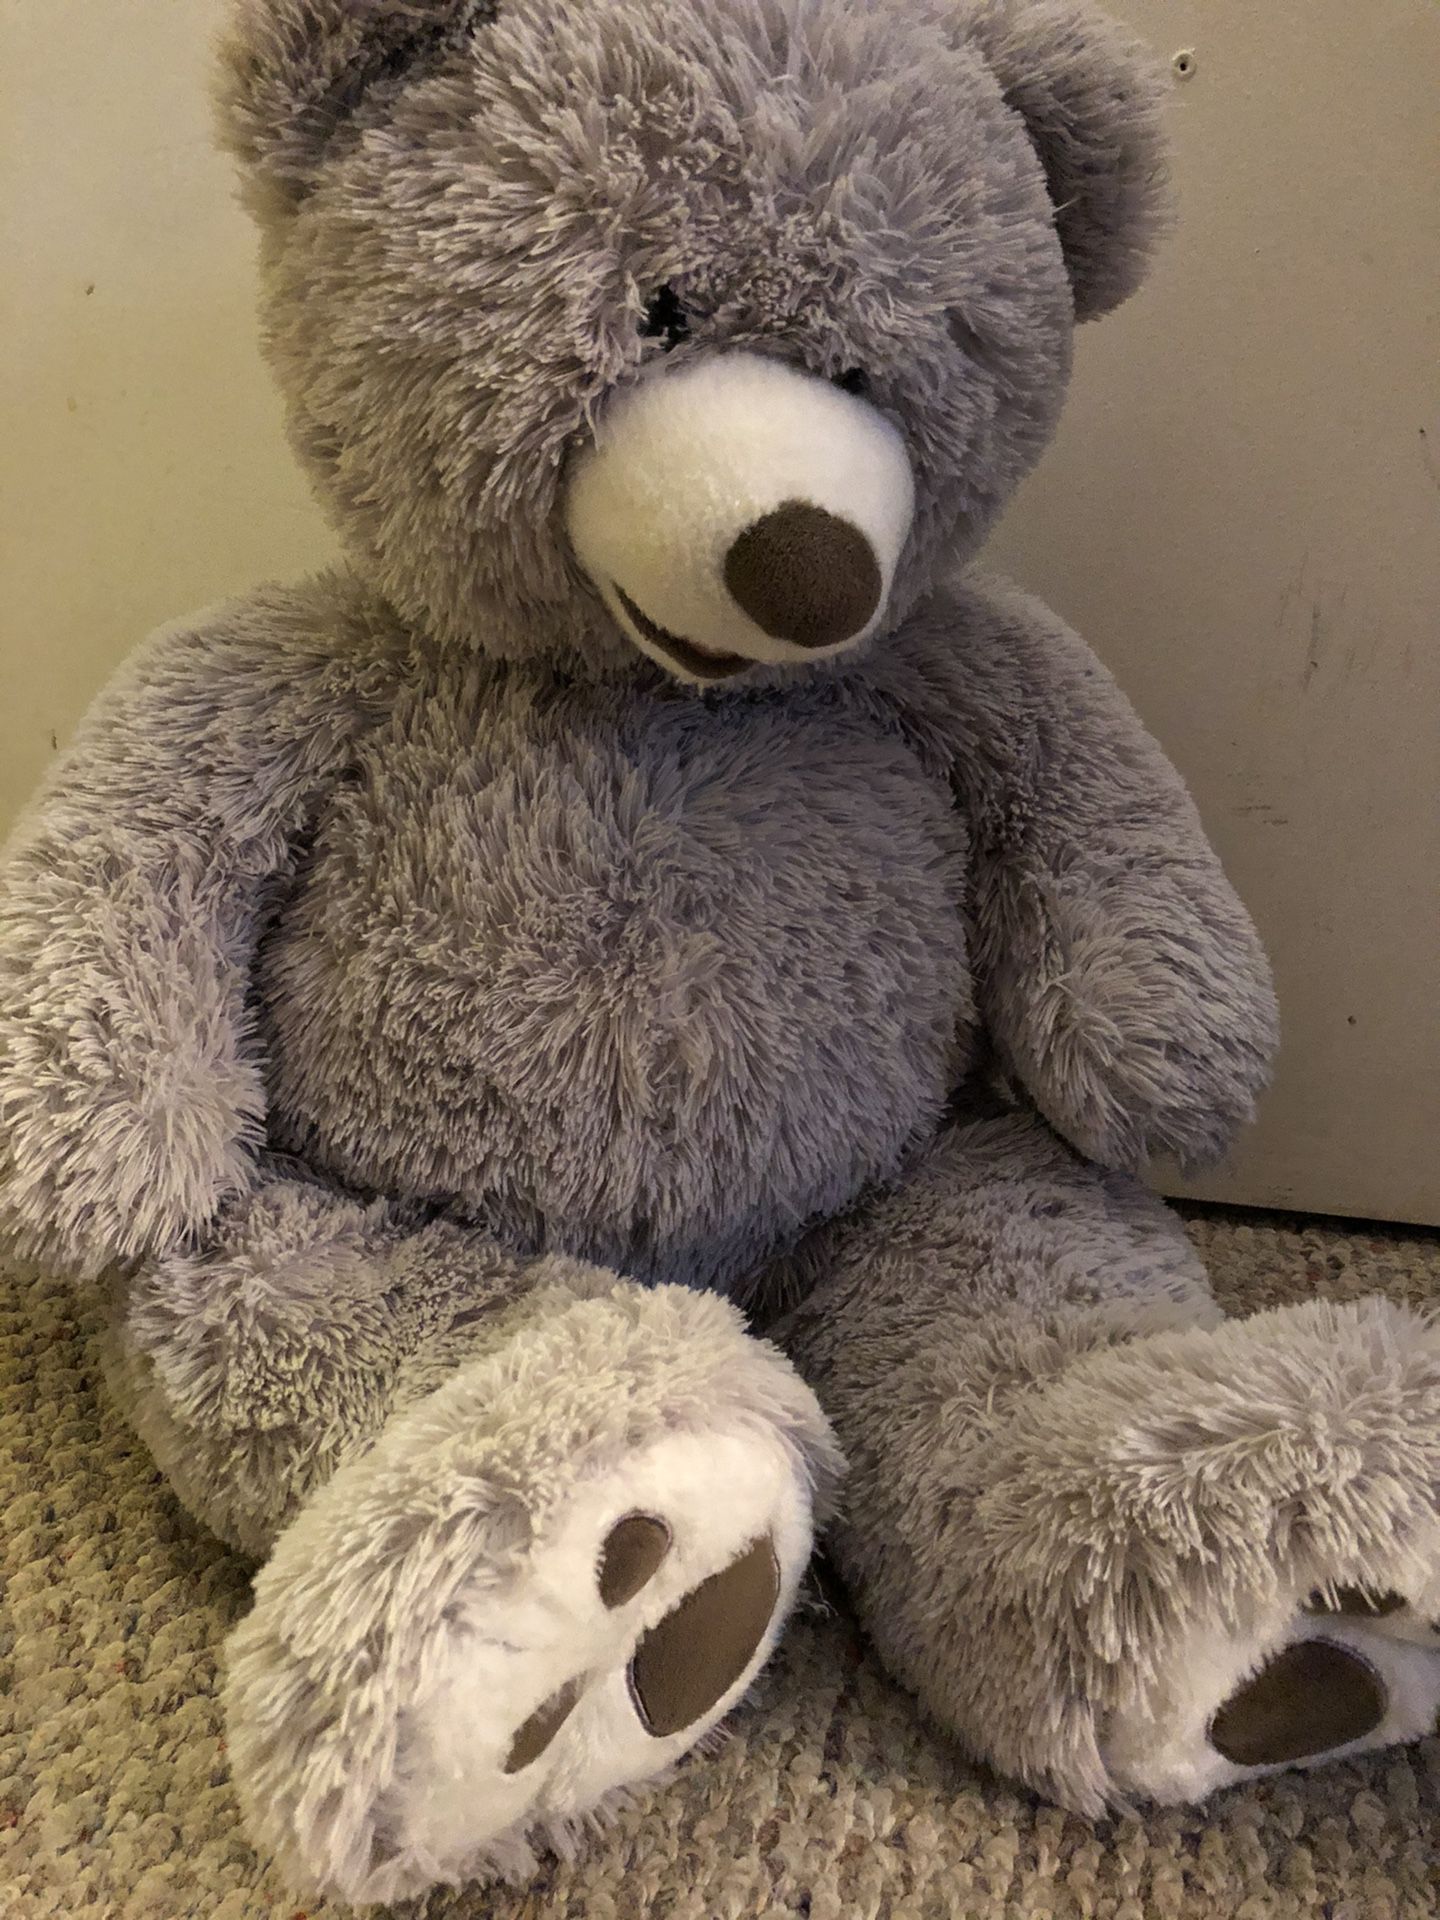 Huggable toddler-sized plush bear